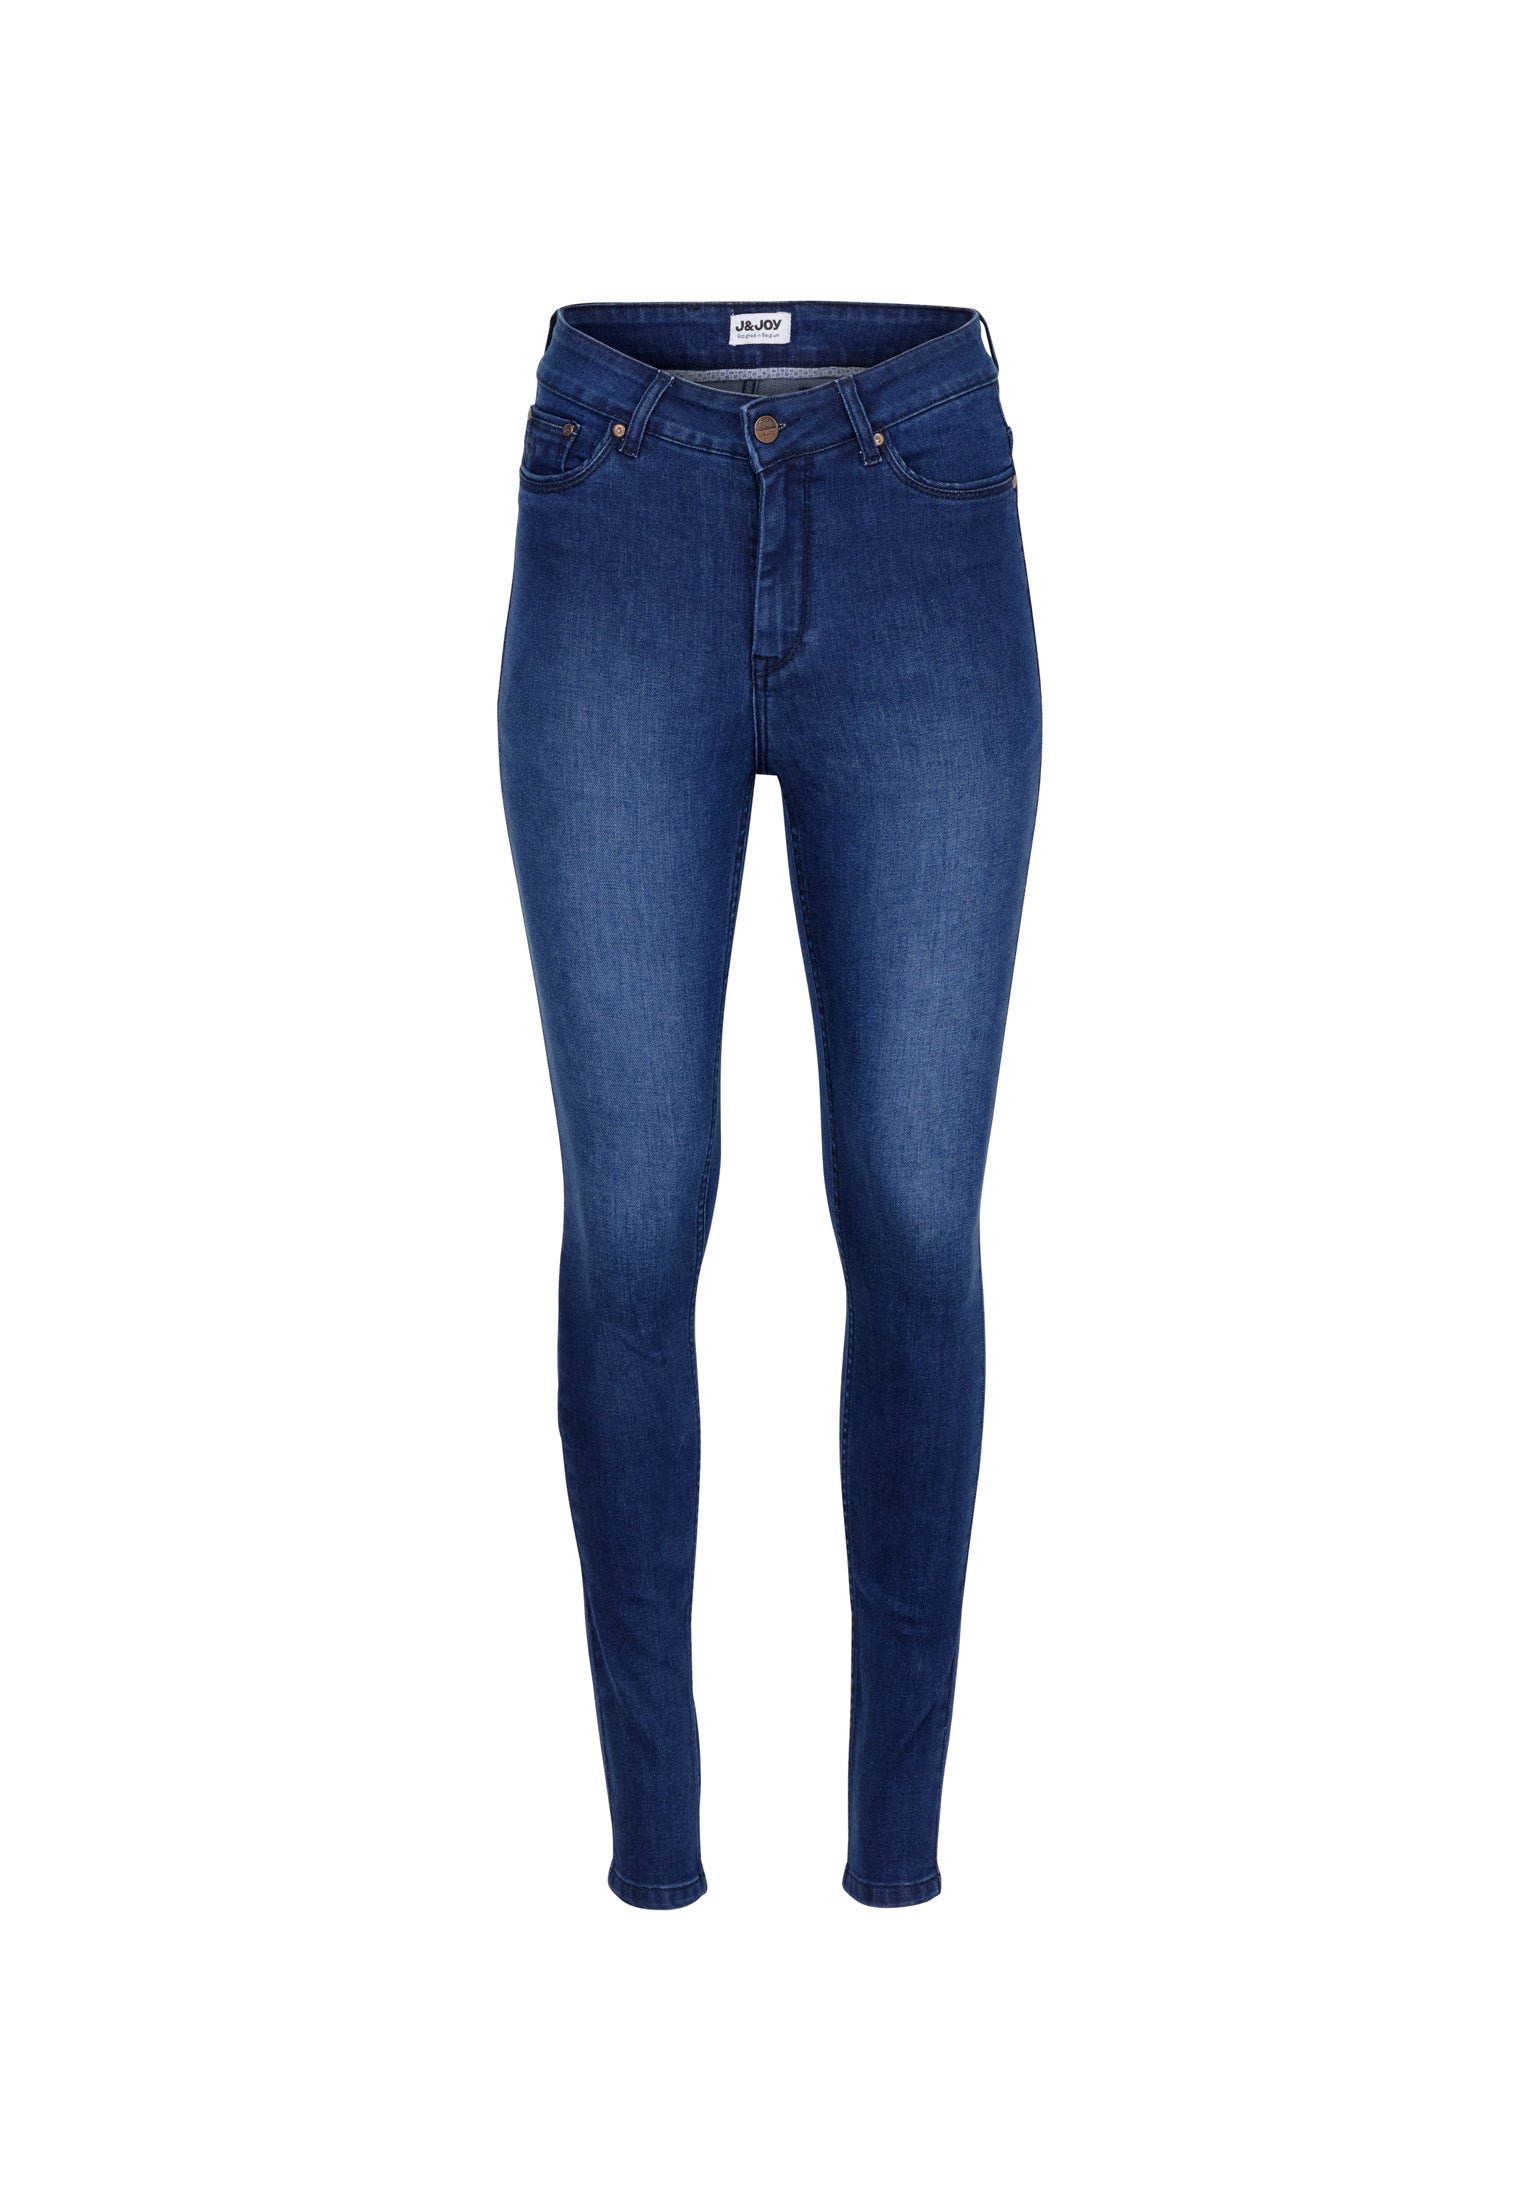 Jeans Femme 02 Medium Blue Denim Slim Fit | J&JOY.